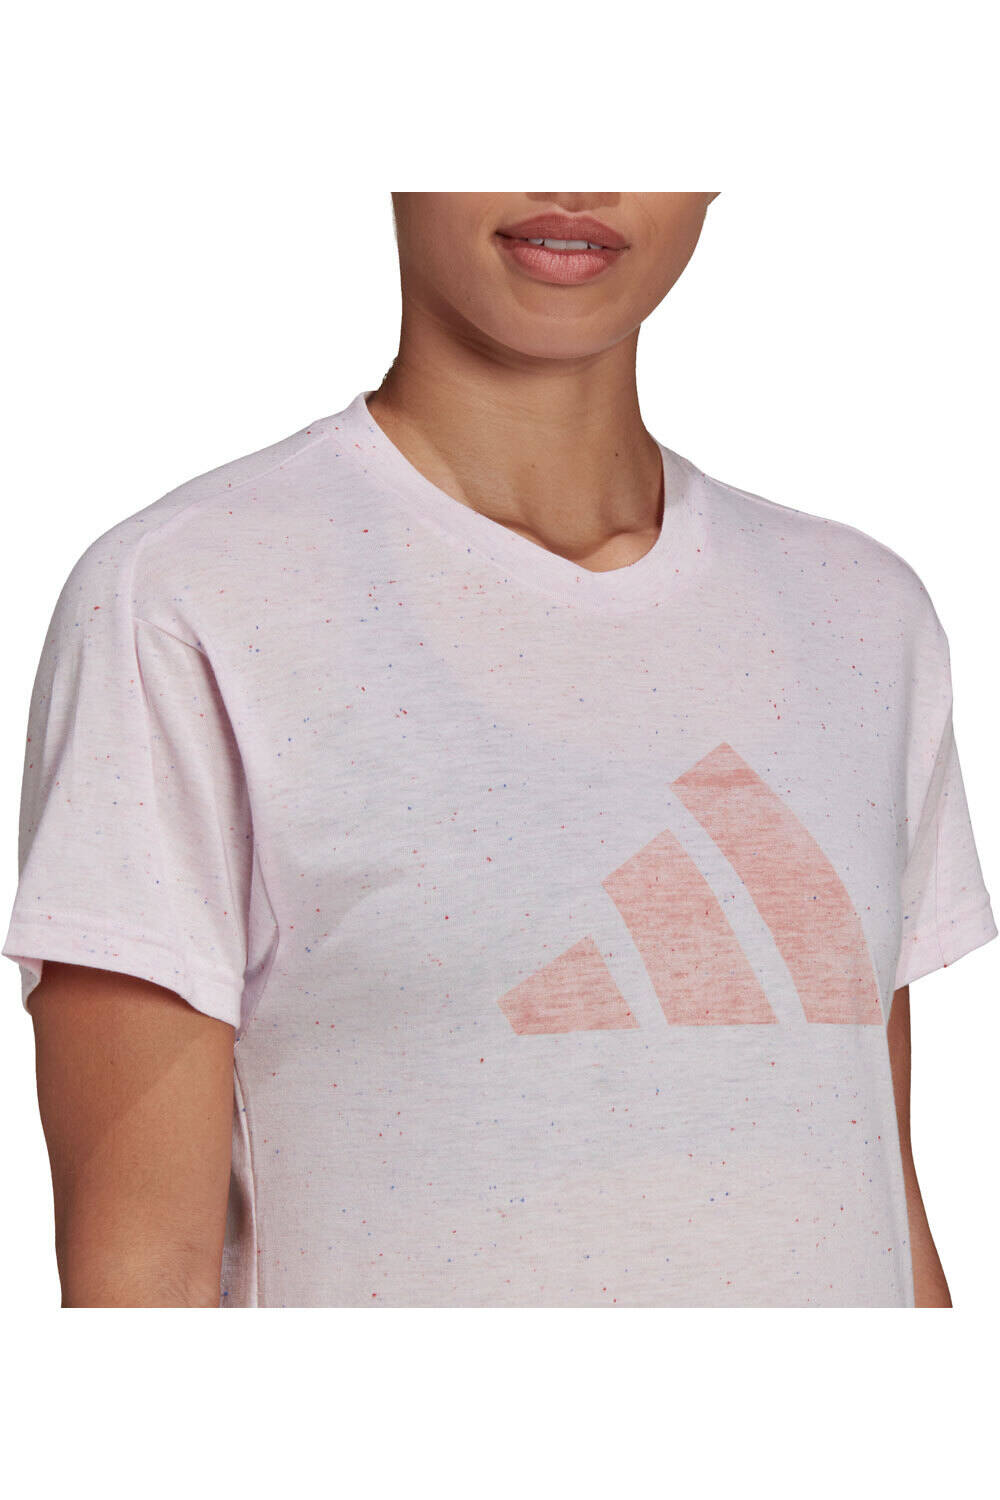 adidas camiseta manga corta mujer W WINRS 3.0 TEE vista detalle